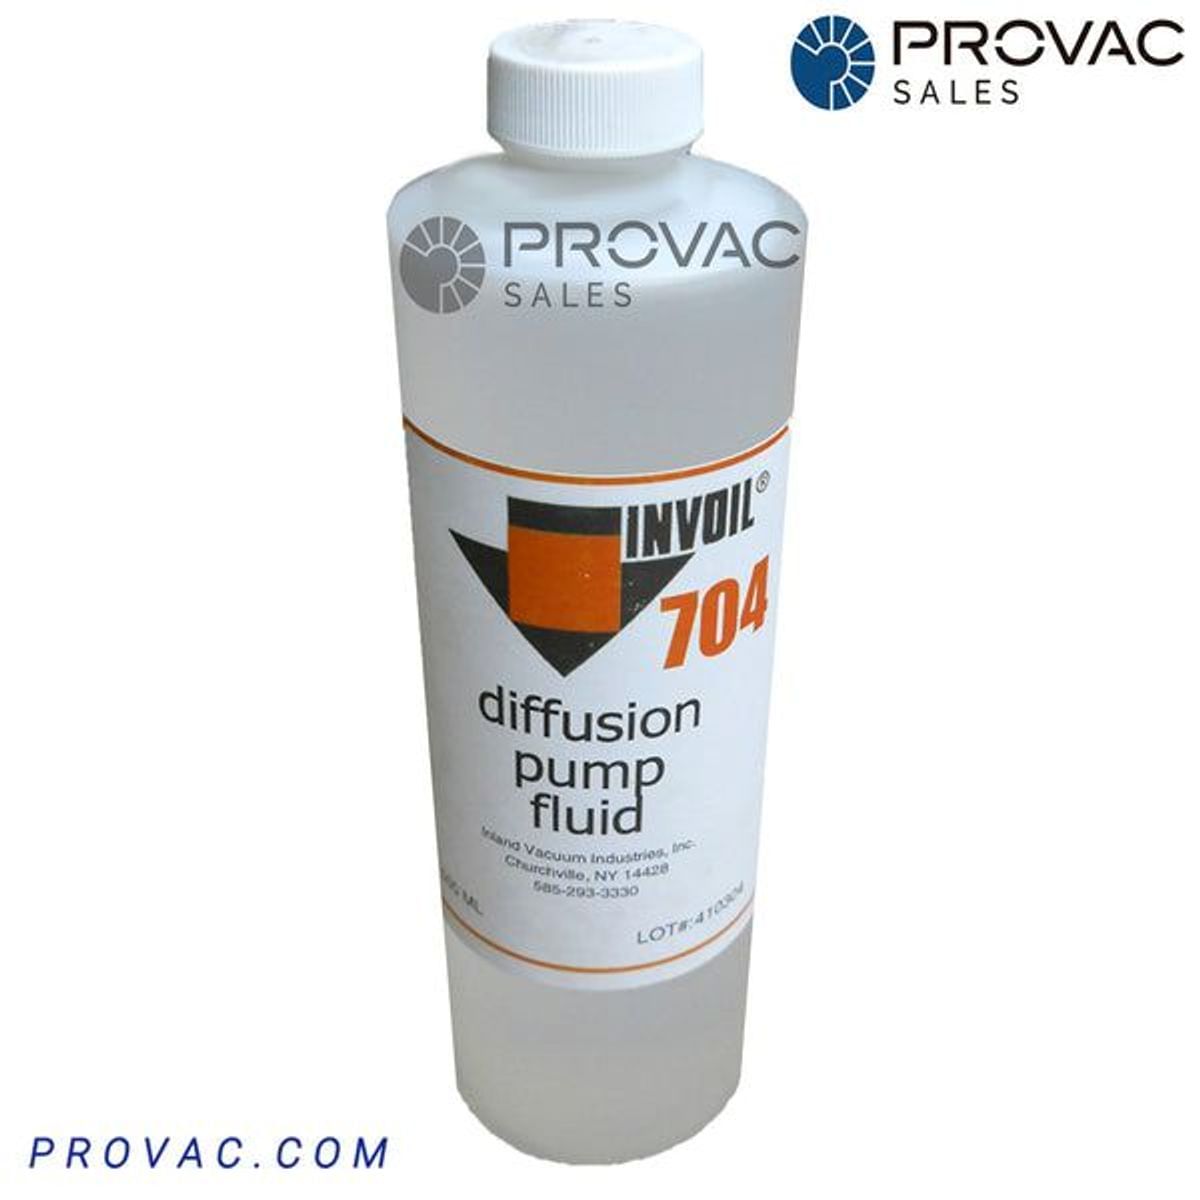 Invoil 704 Diffusion Pump Oil, liter Image 1